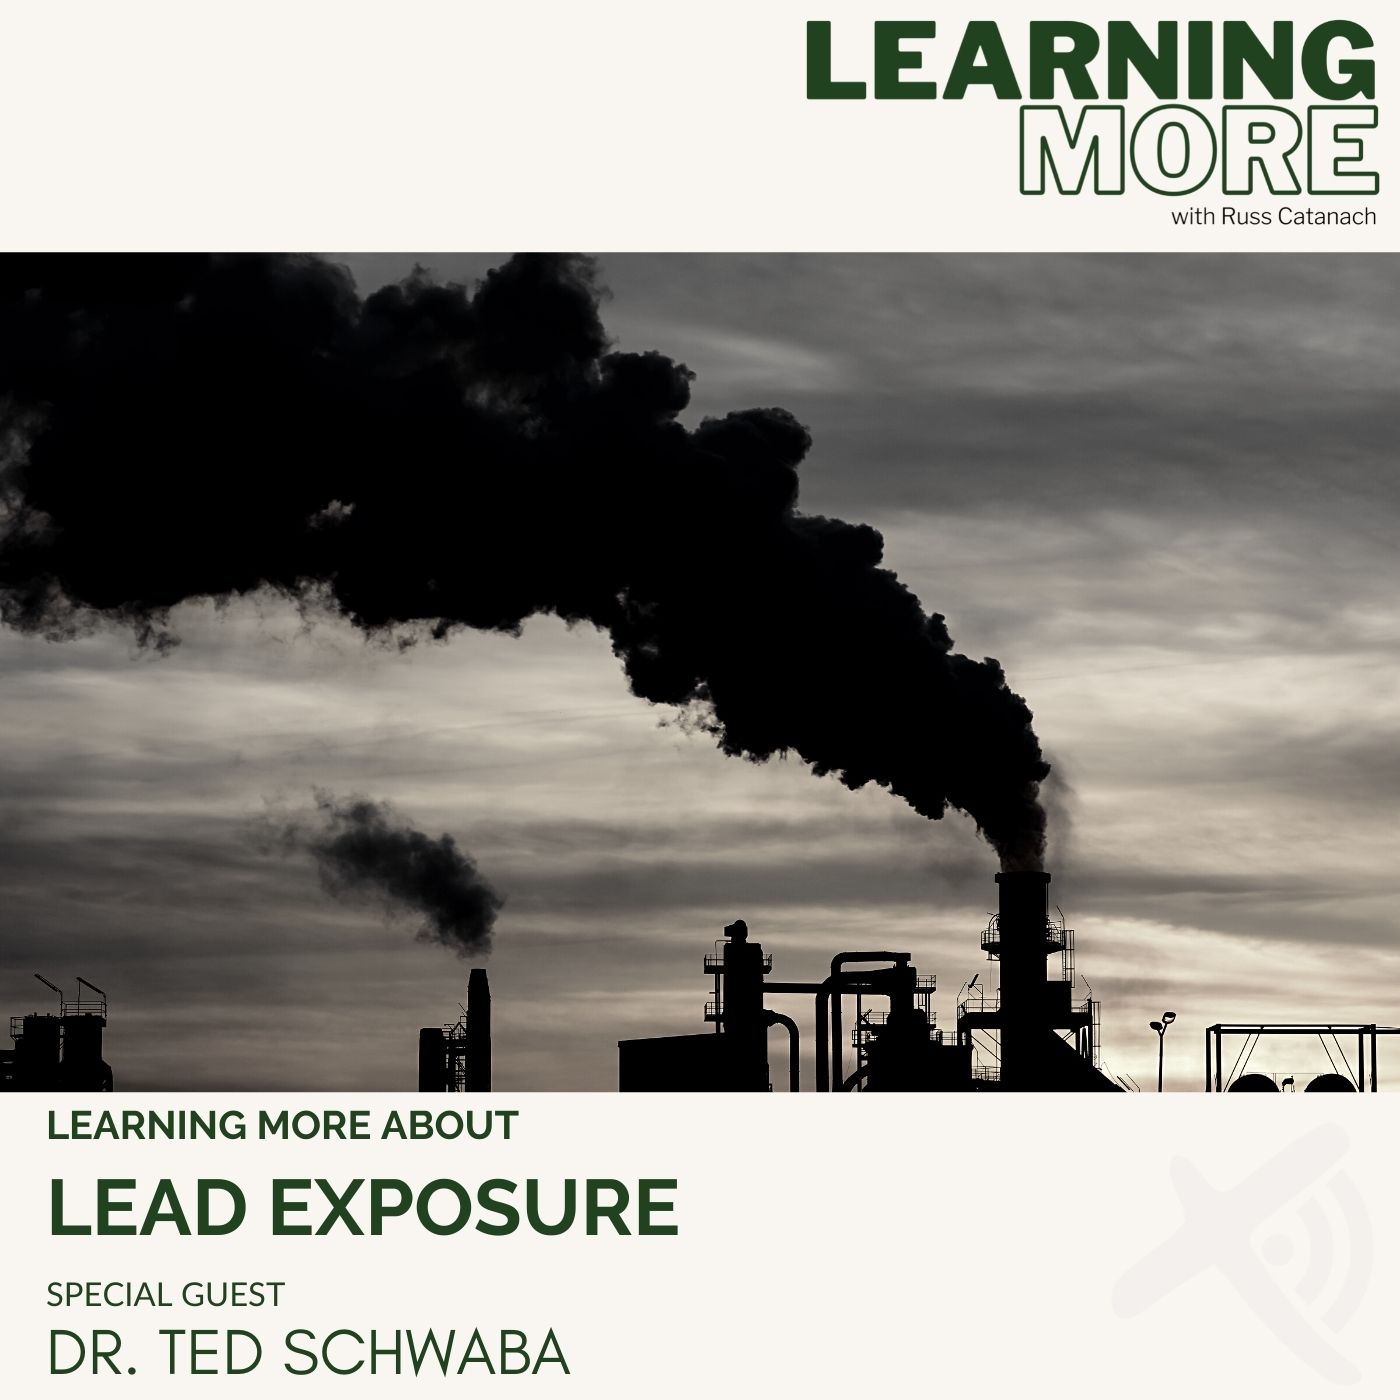 Lead Exposure